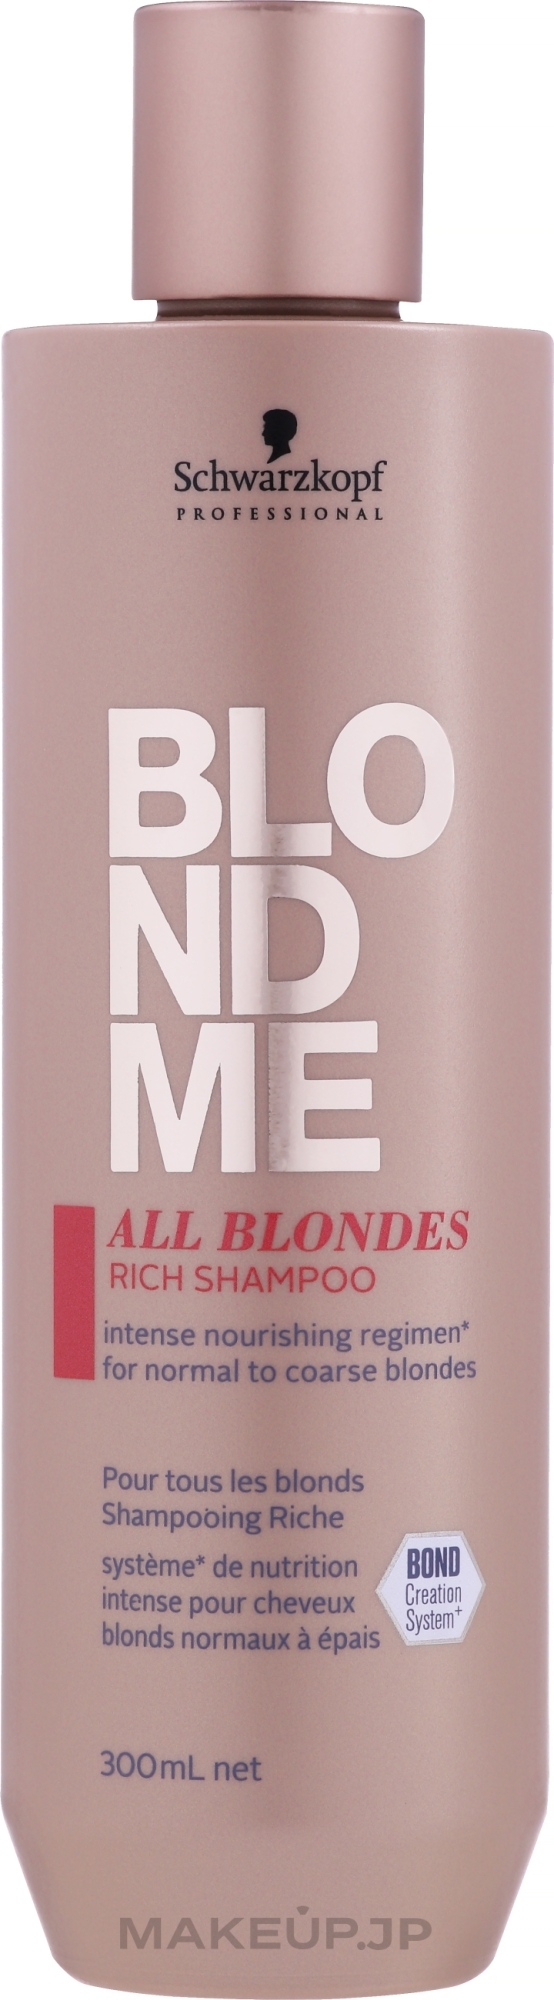 Rich Shampoo for All Hair Types - Schwarzkopf Professional Blondme All Blondes Rich Shampoo — photo 300 ml